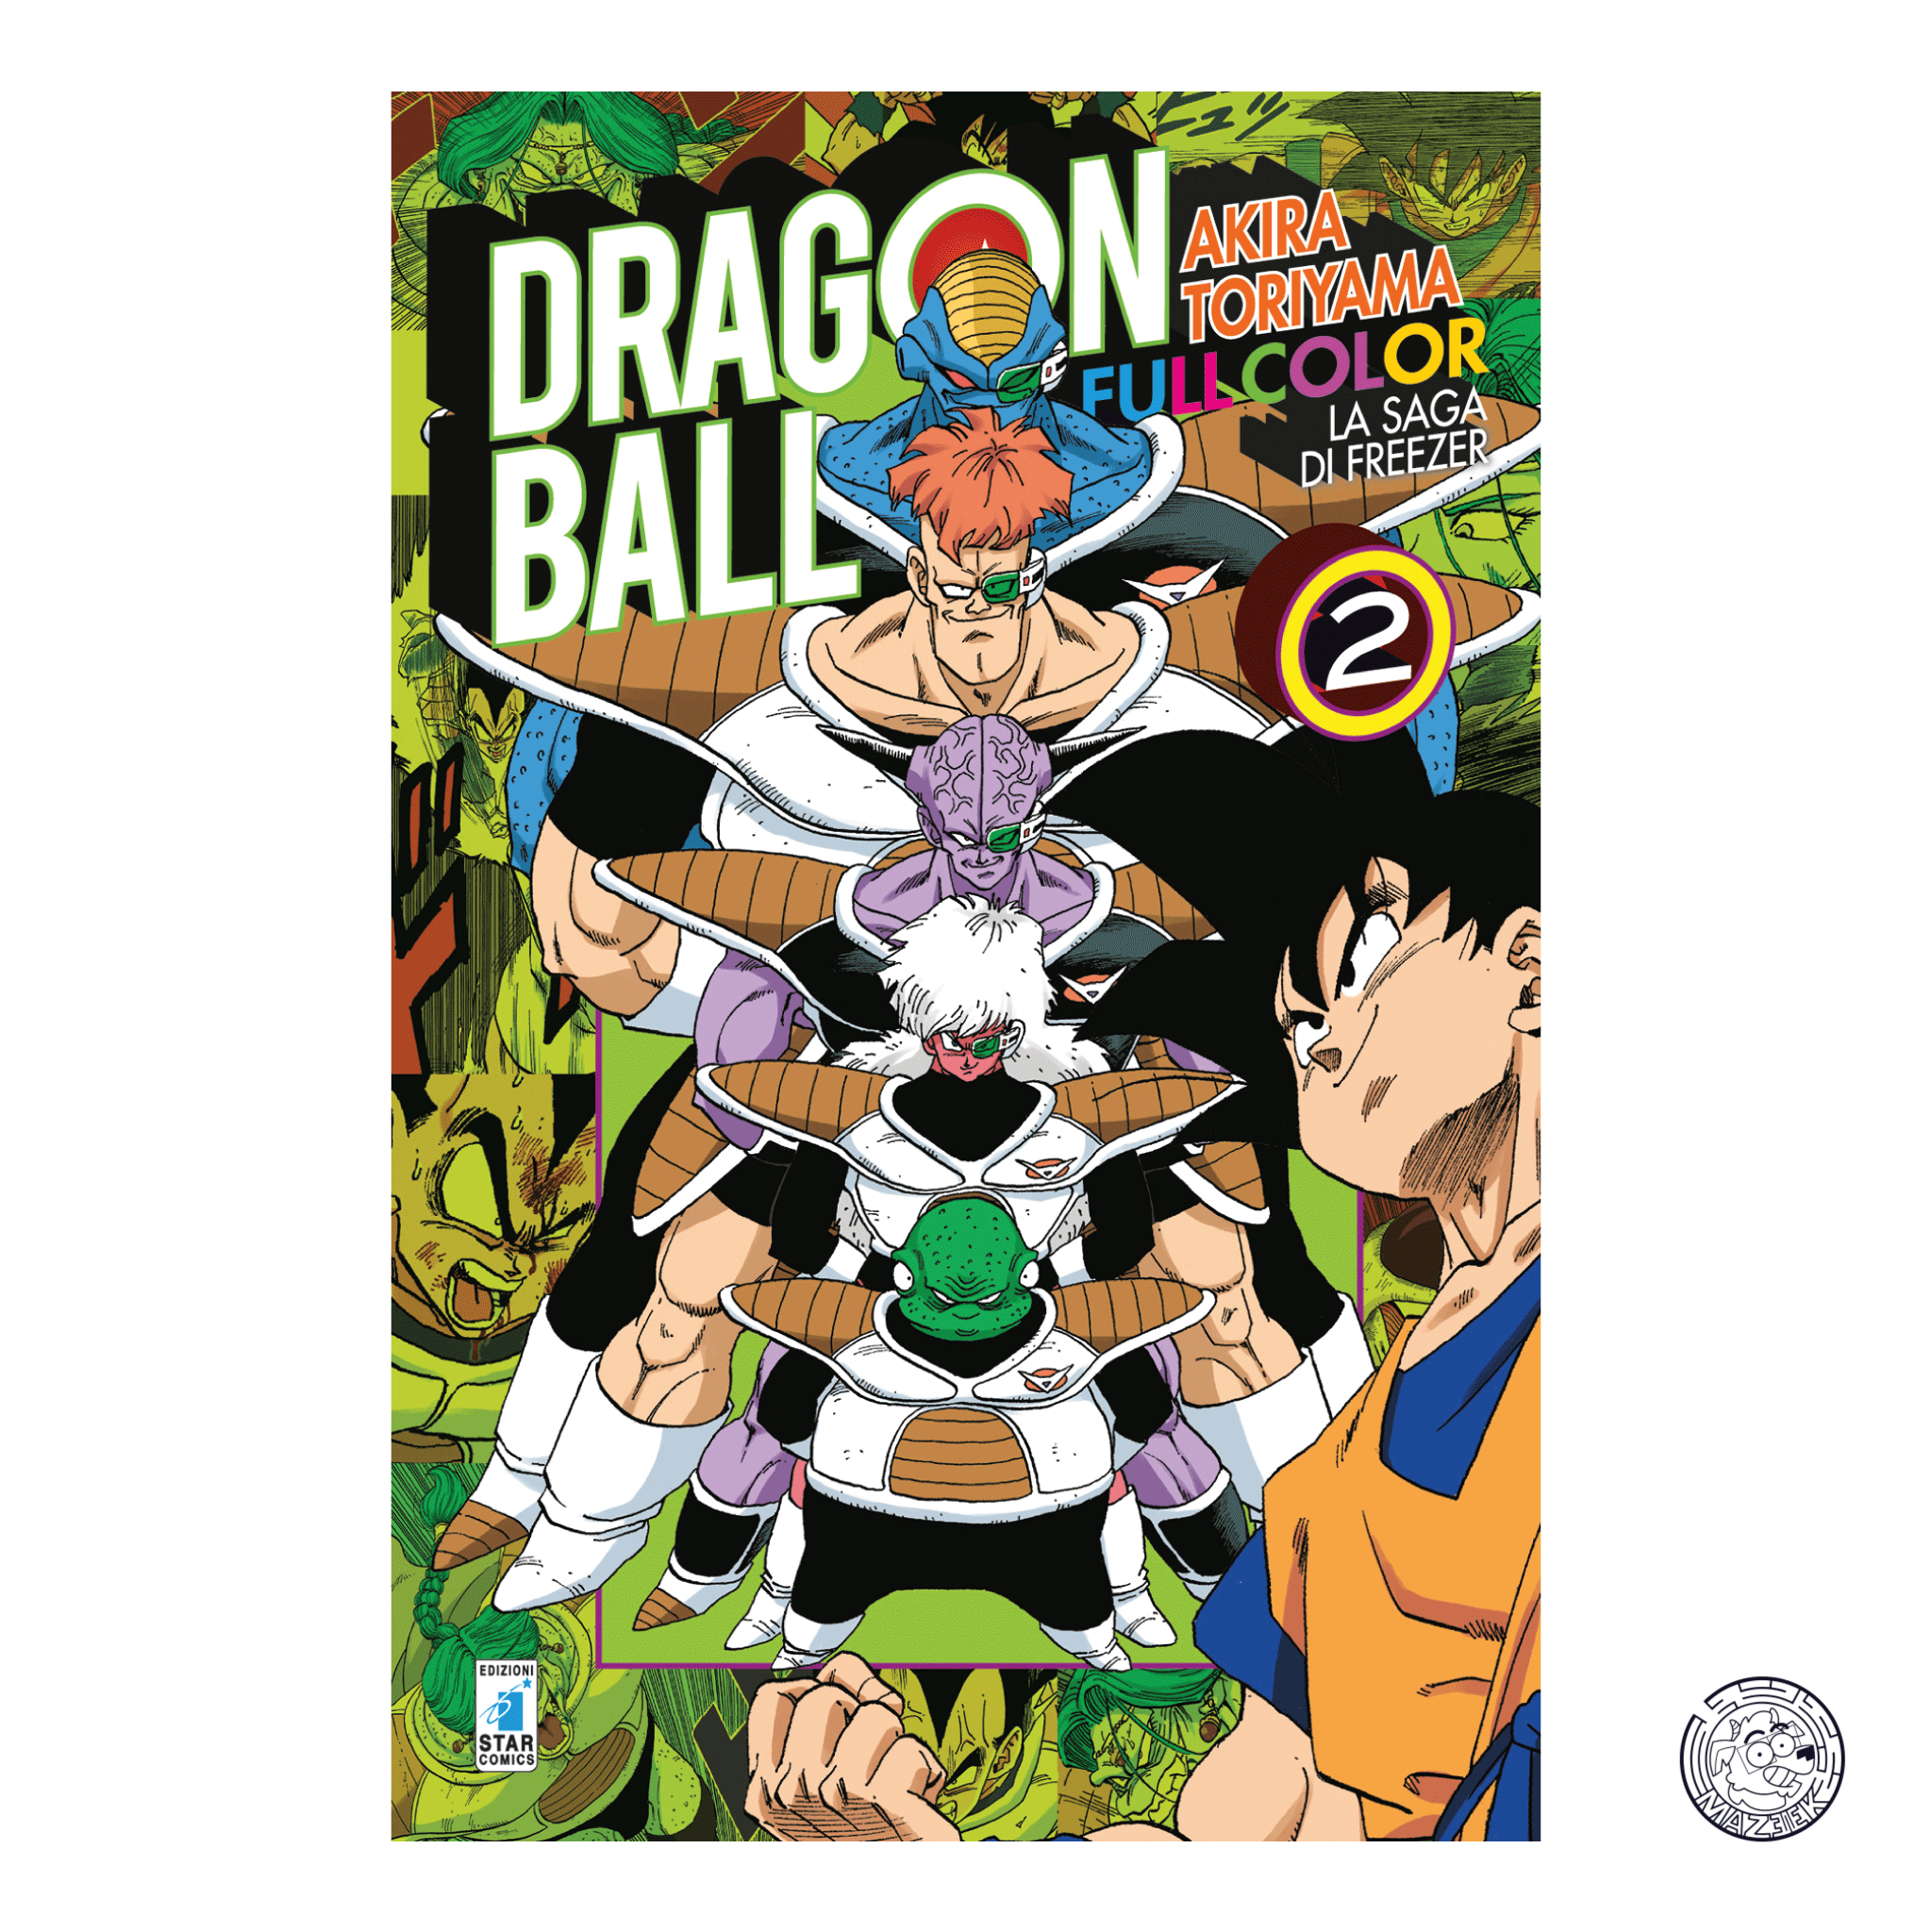 Dragon Ball Full Color 17: The Frieza Saga 2